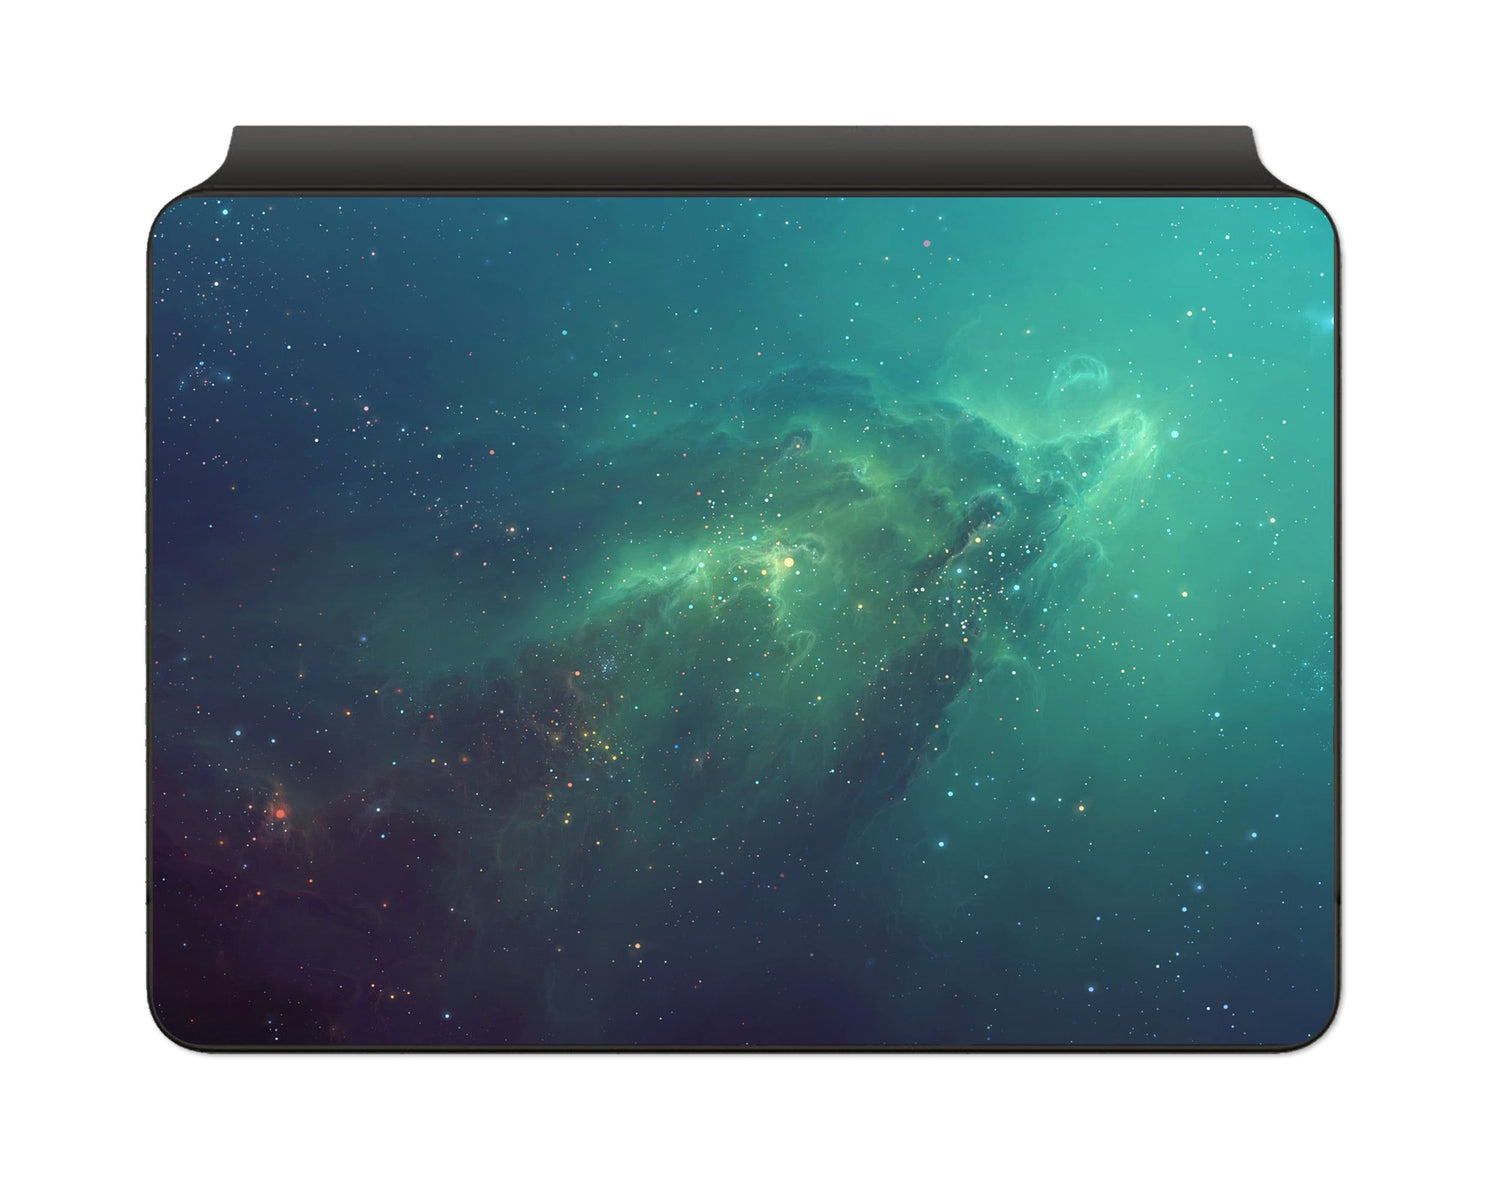 Lux Skins Magic Keyboard Green Stardust Galaxy iPad Air Skins - Galaxy Artwork Skin